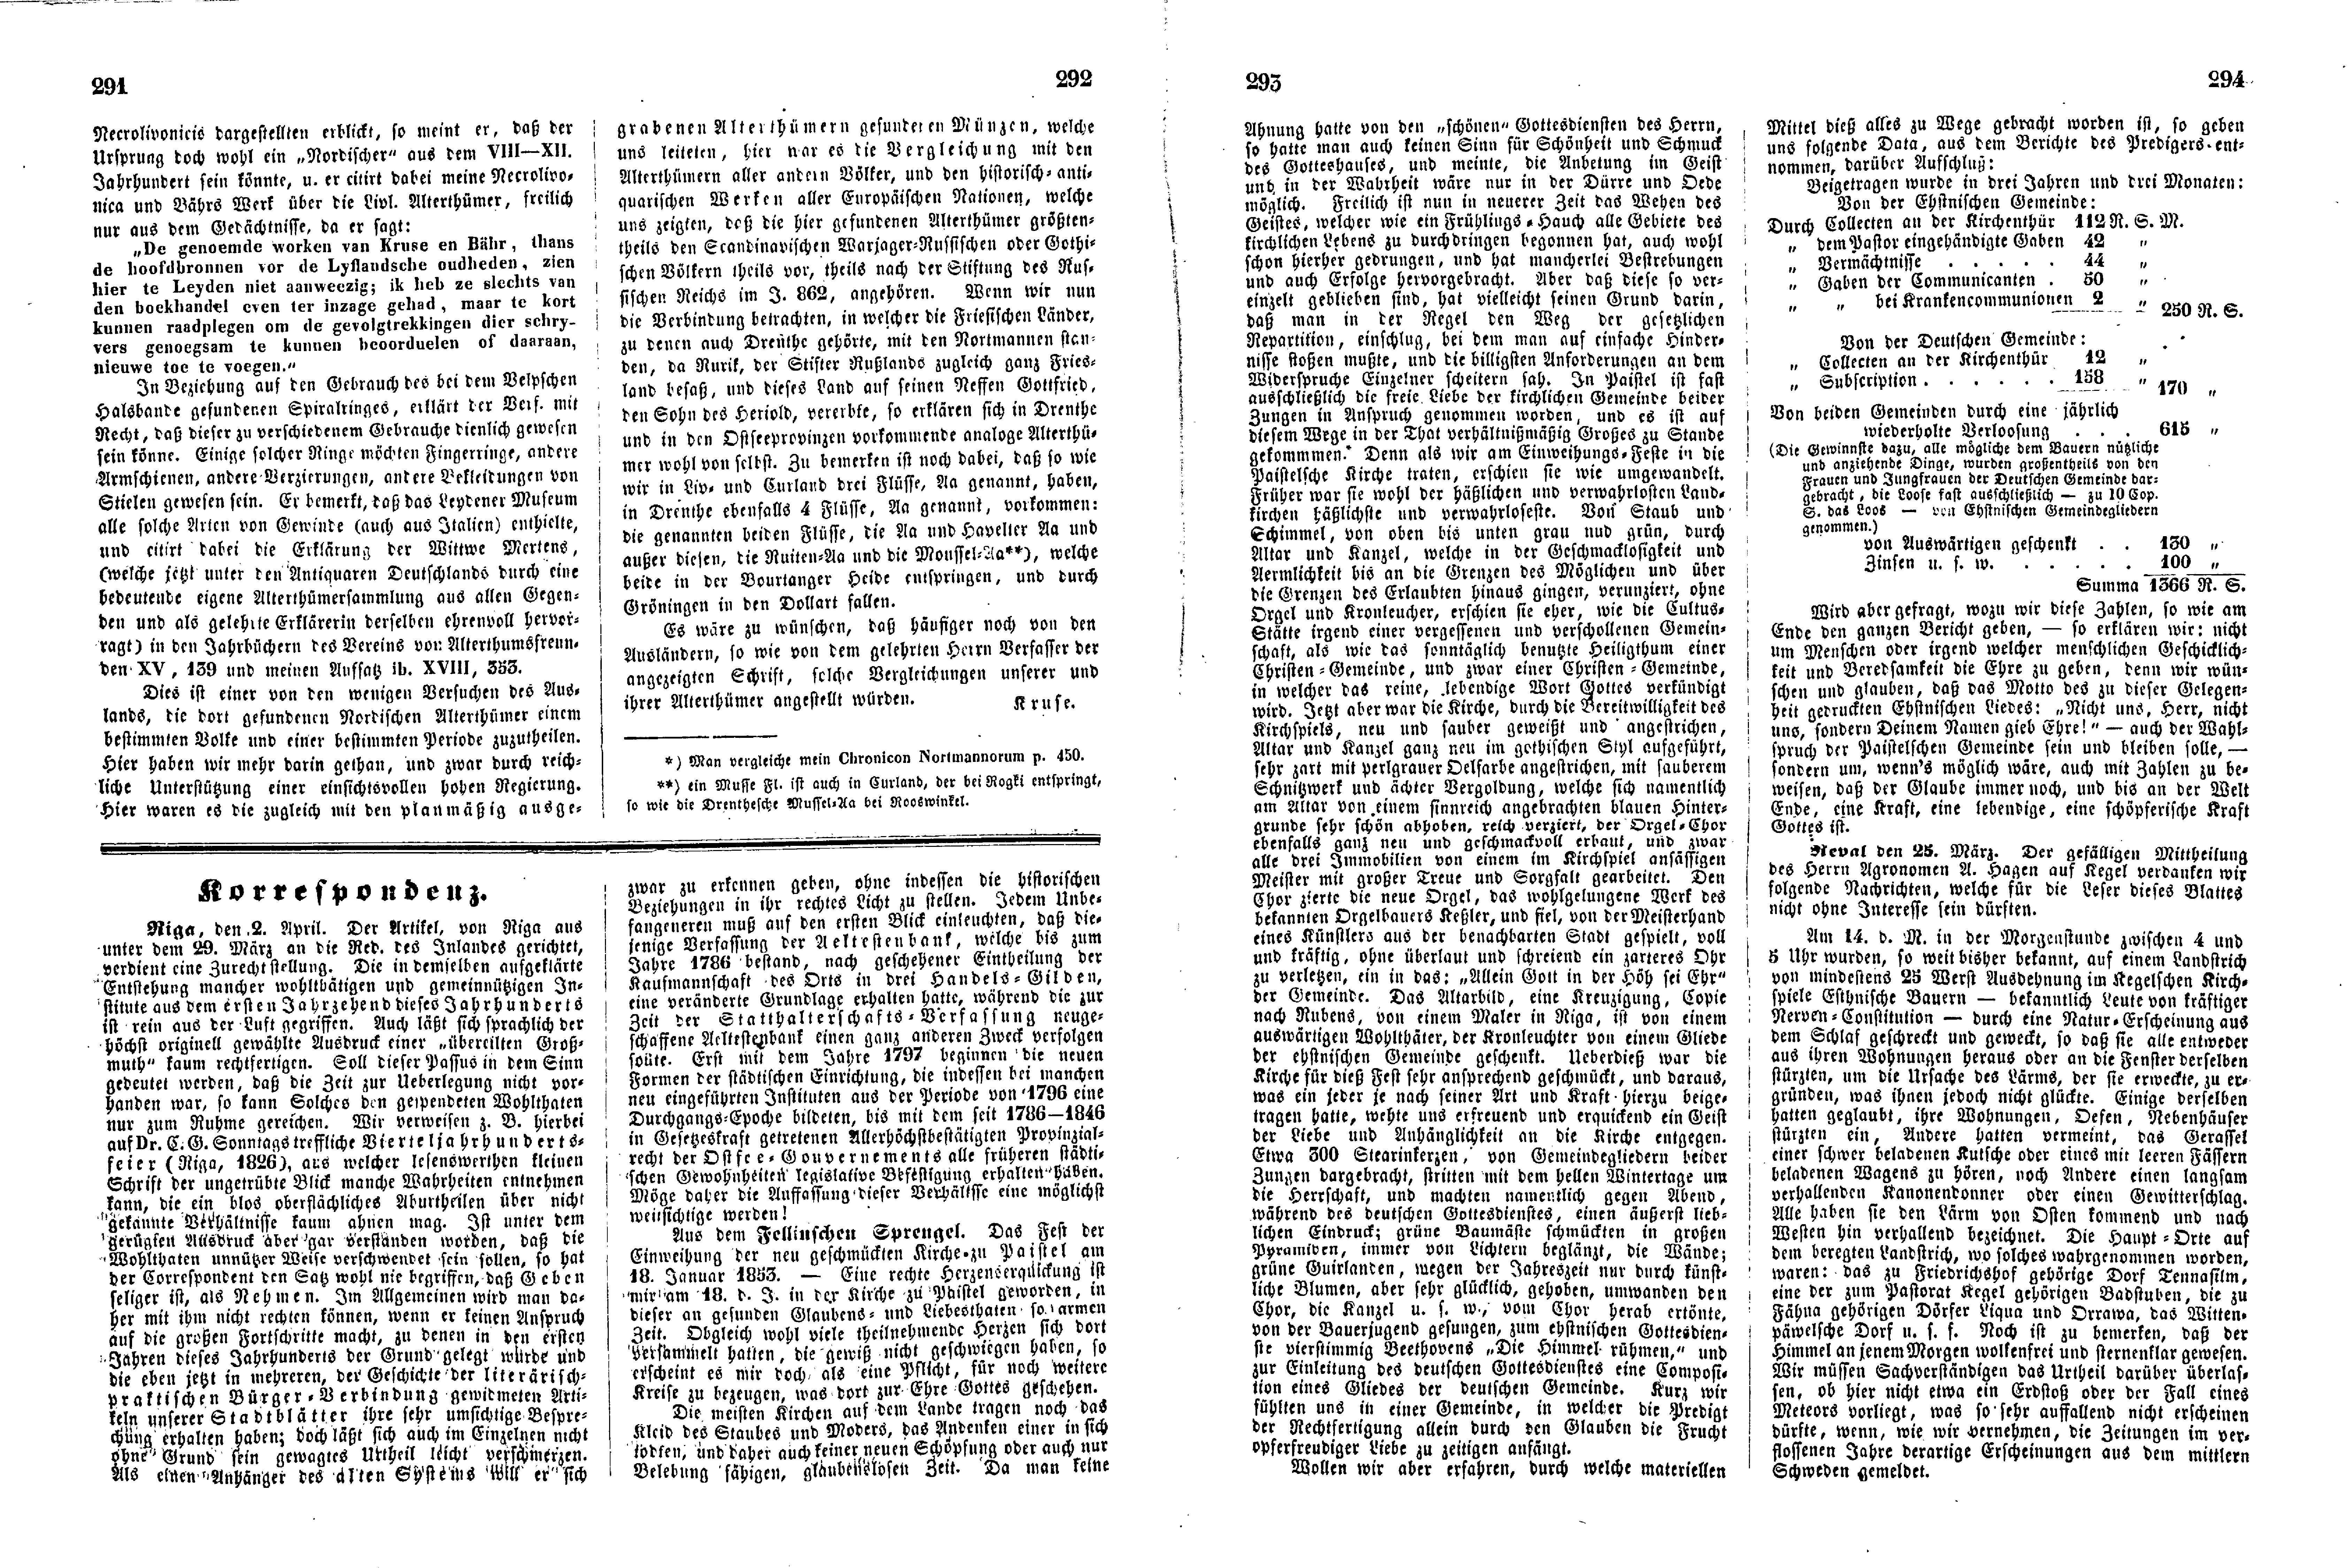 Das Inland [18] (1853) | 83. (291-294) Main body of text